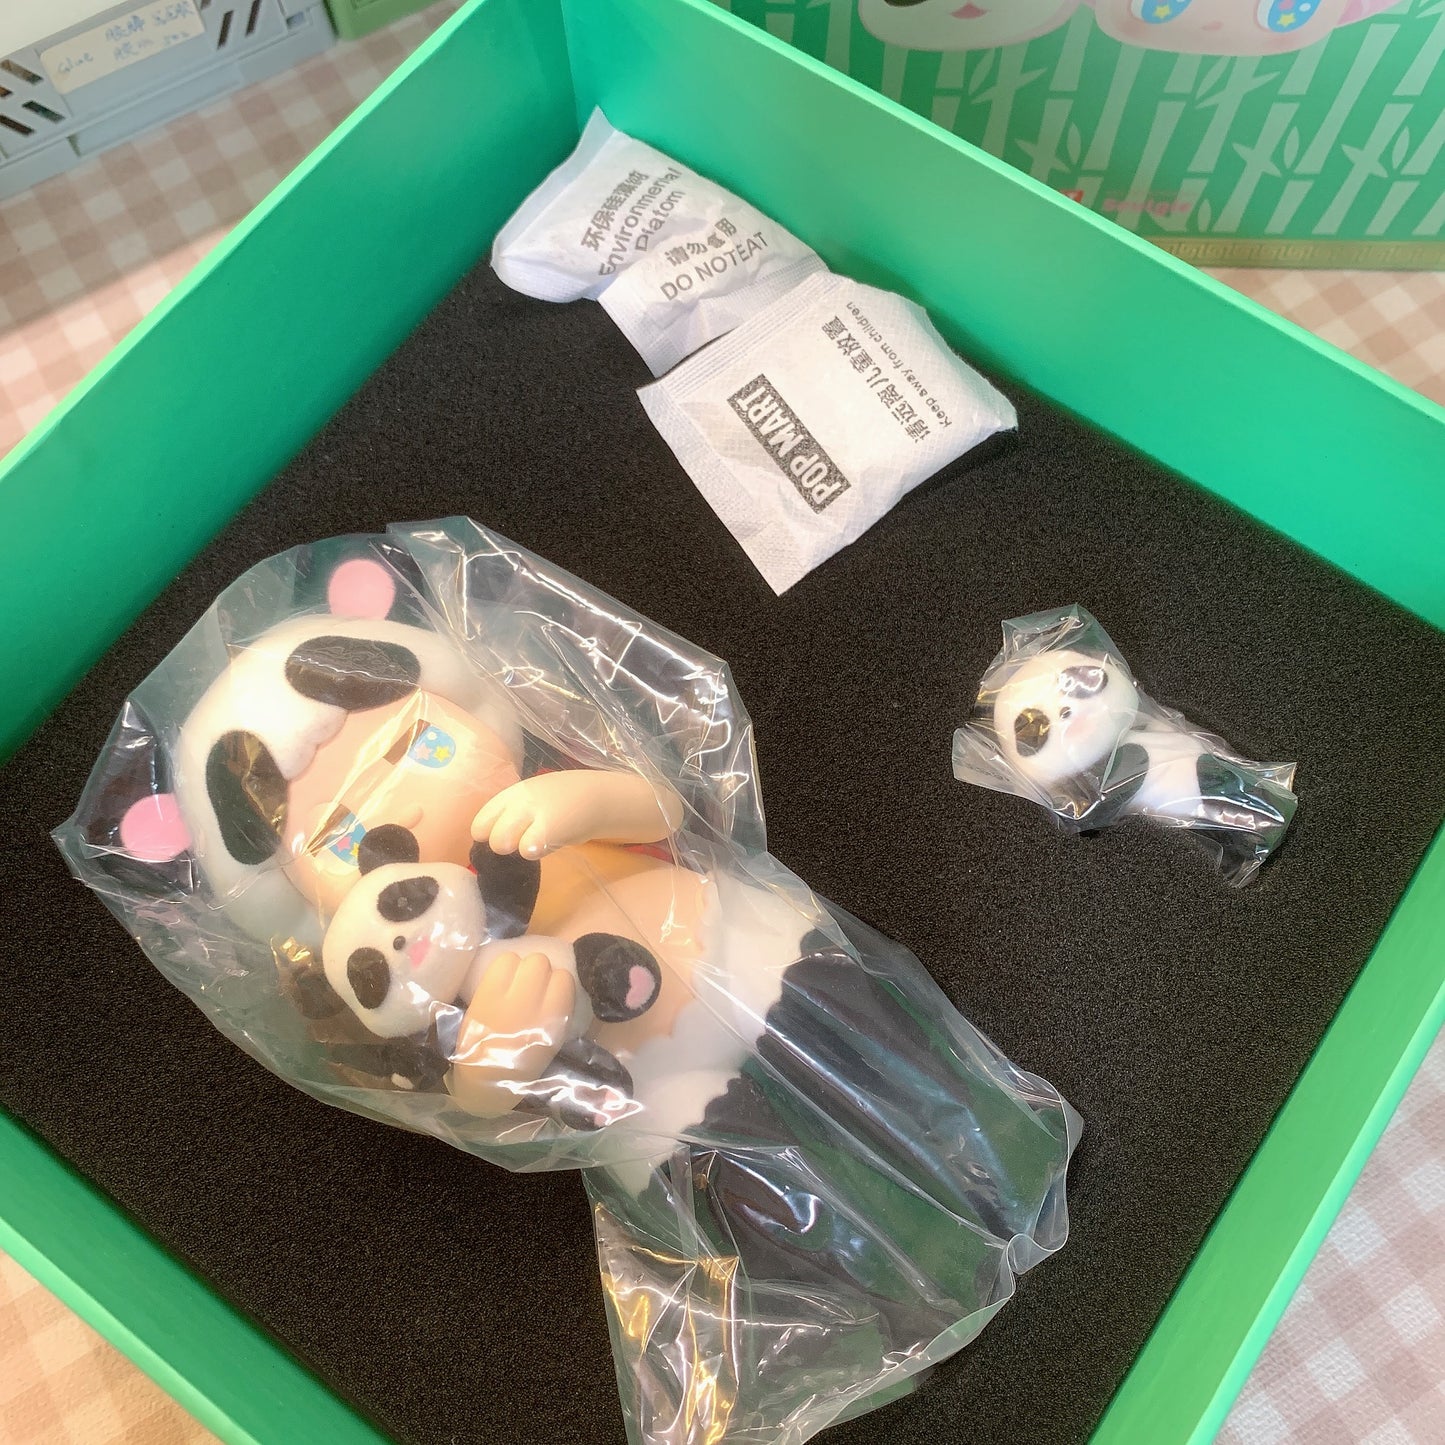 POP MART Satry rory giant cutie Panda baby figurine/toy